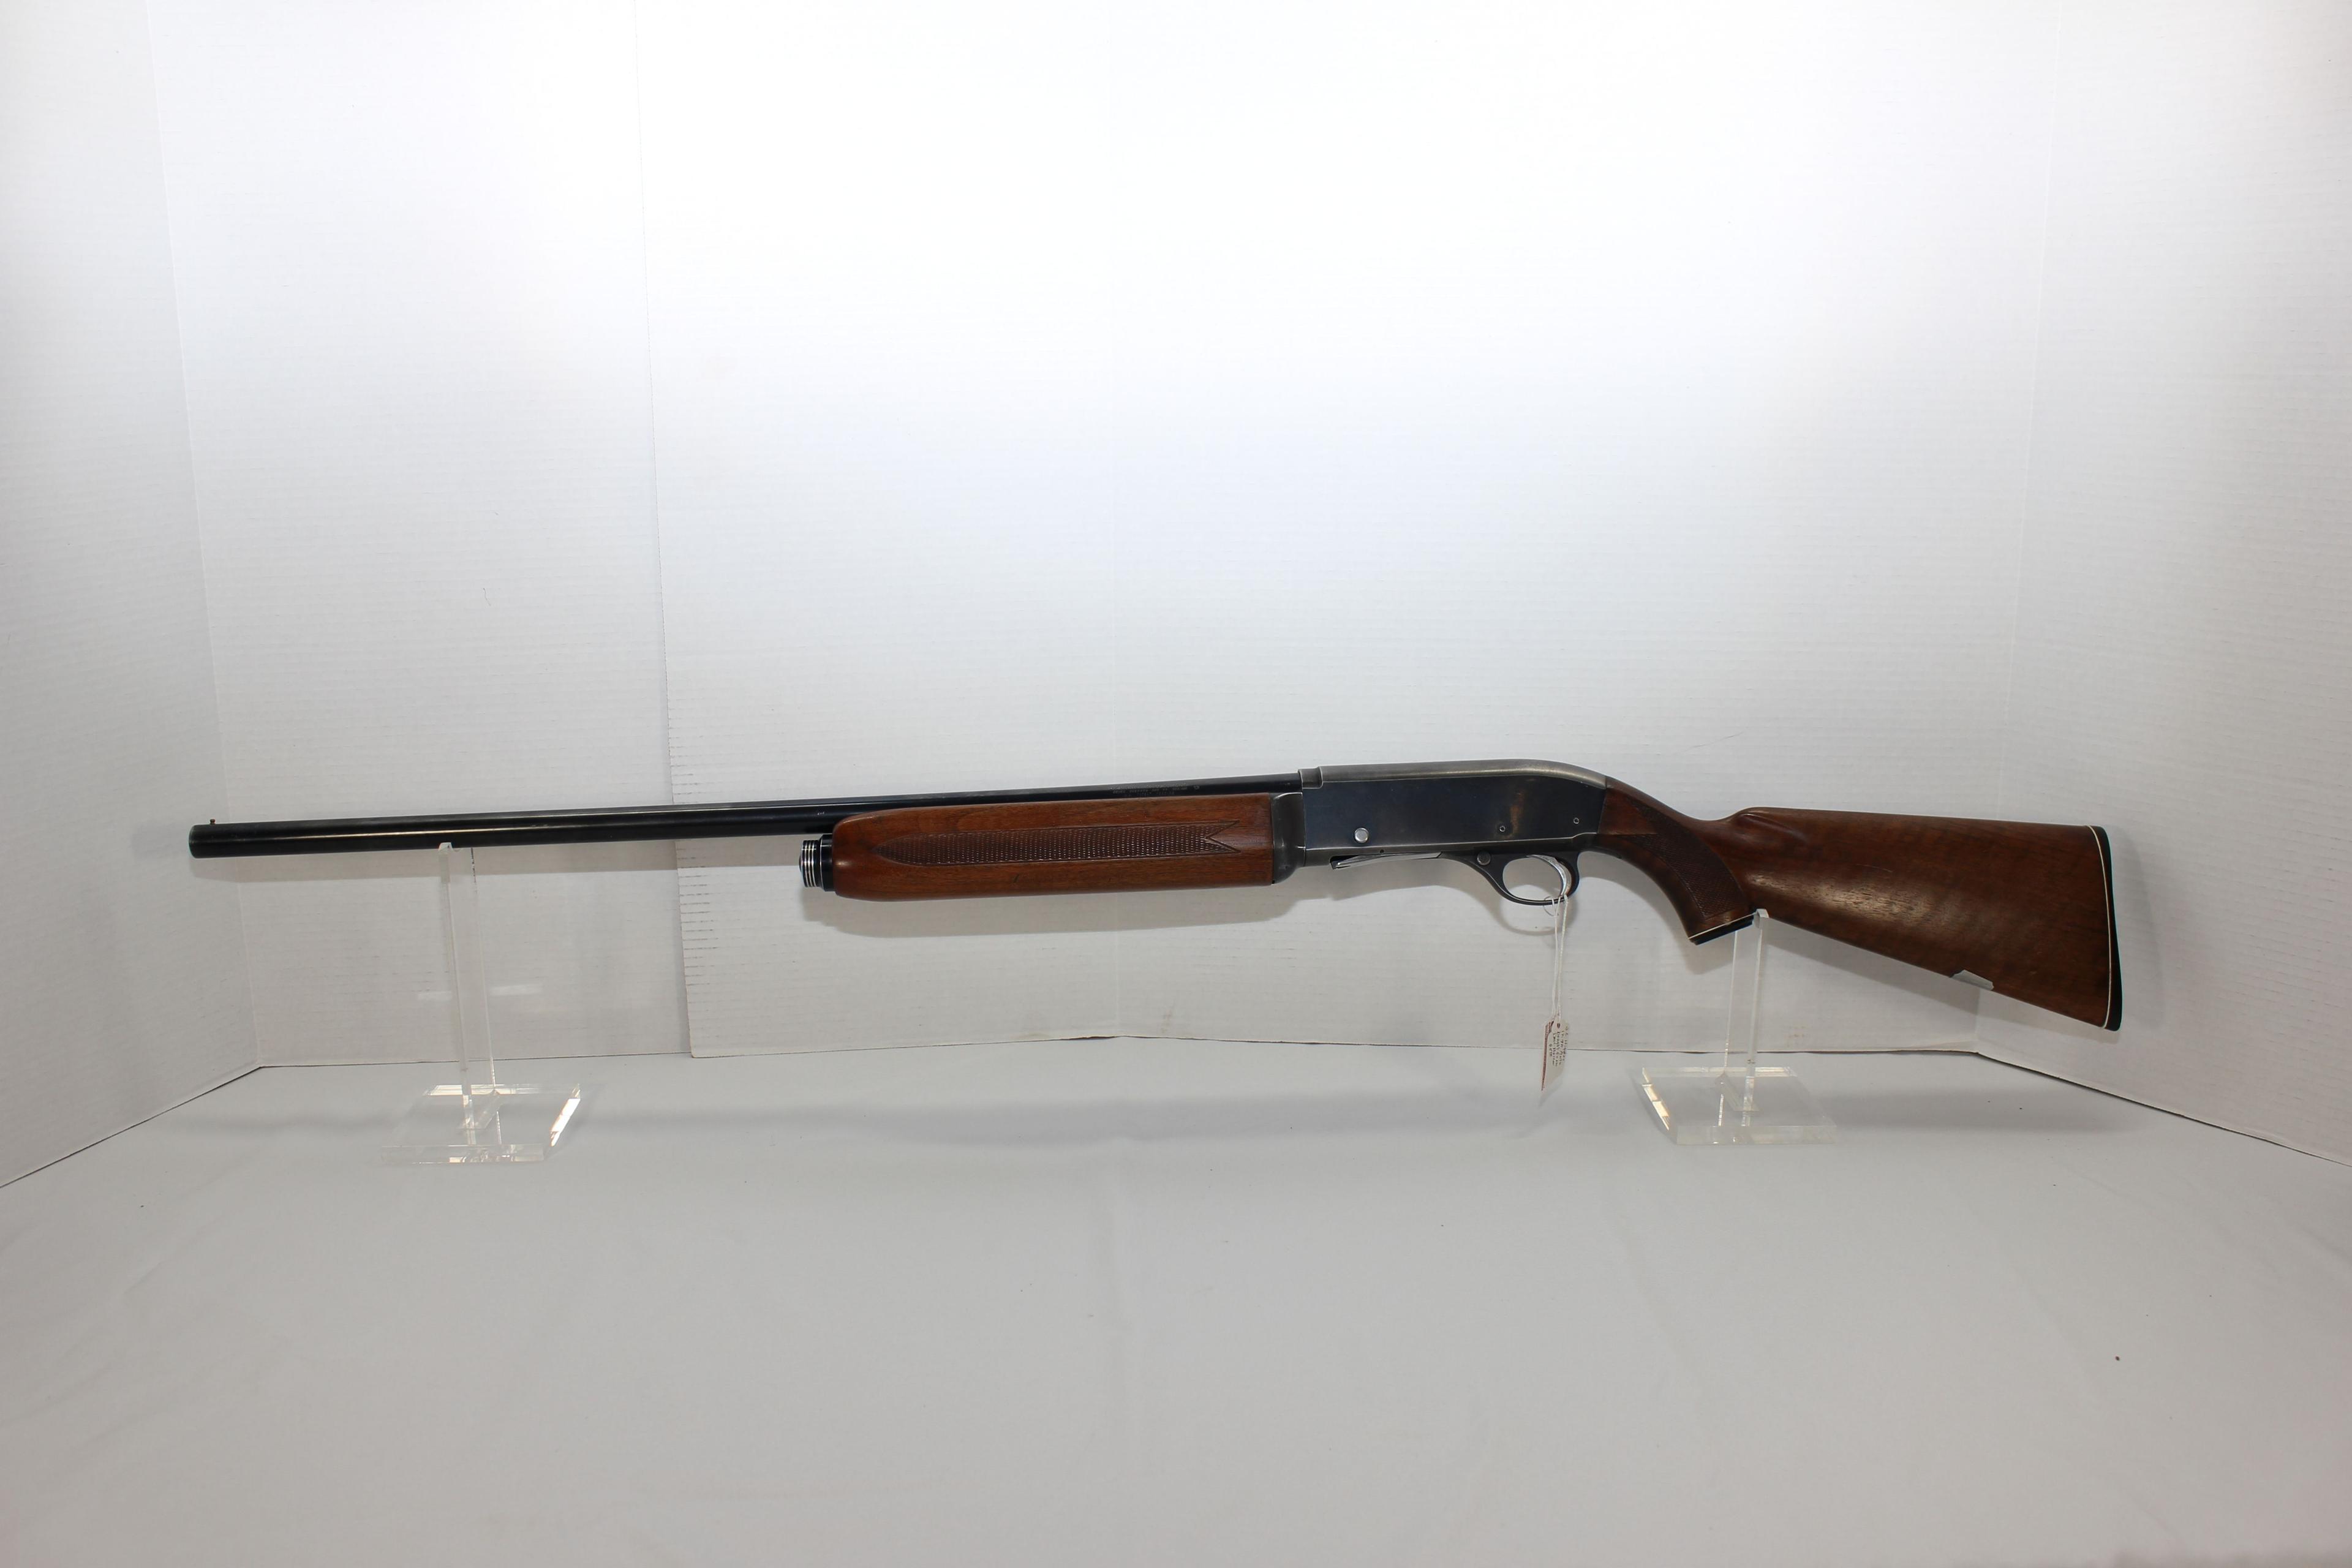 Sears & Roebuck by J.C. Higgins Model 60 12 Ga. 2-3/4" Cham. Semi Automatic Shotgun w/28" BBL; SN N/